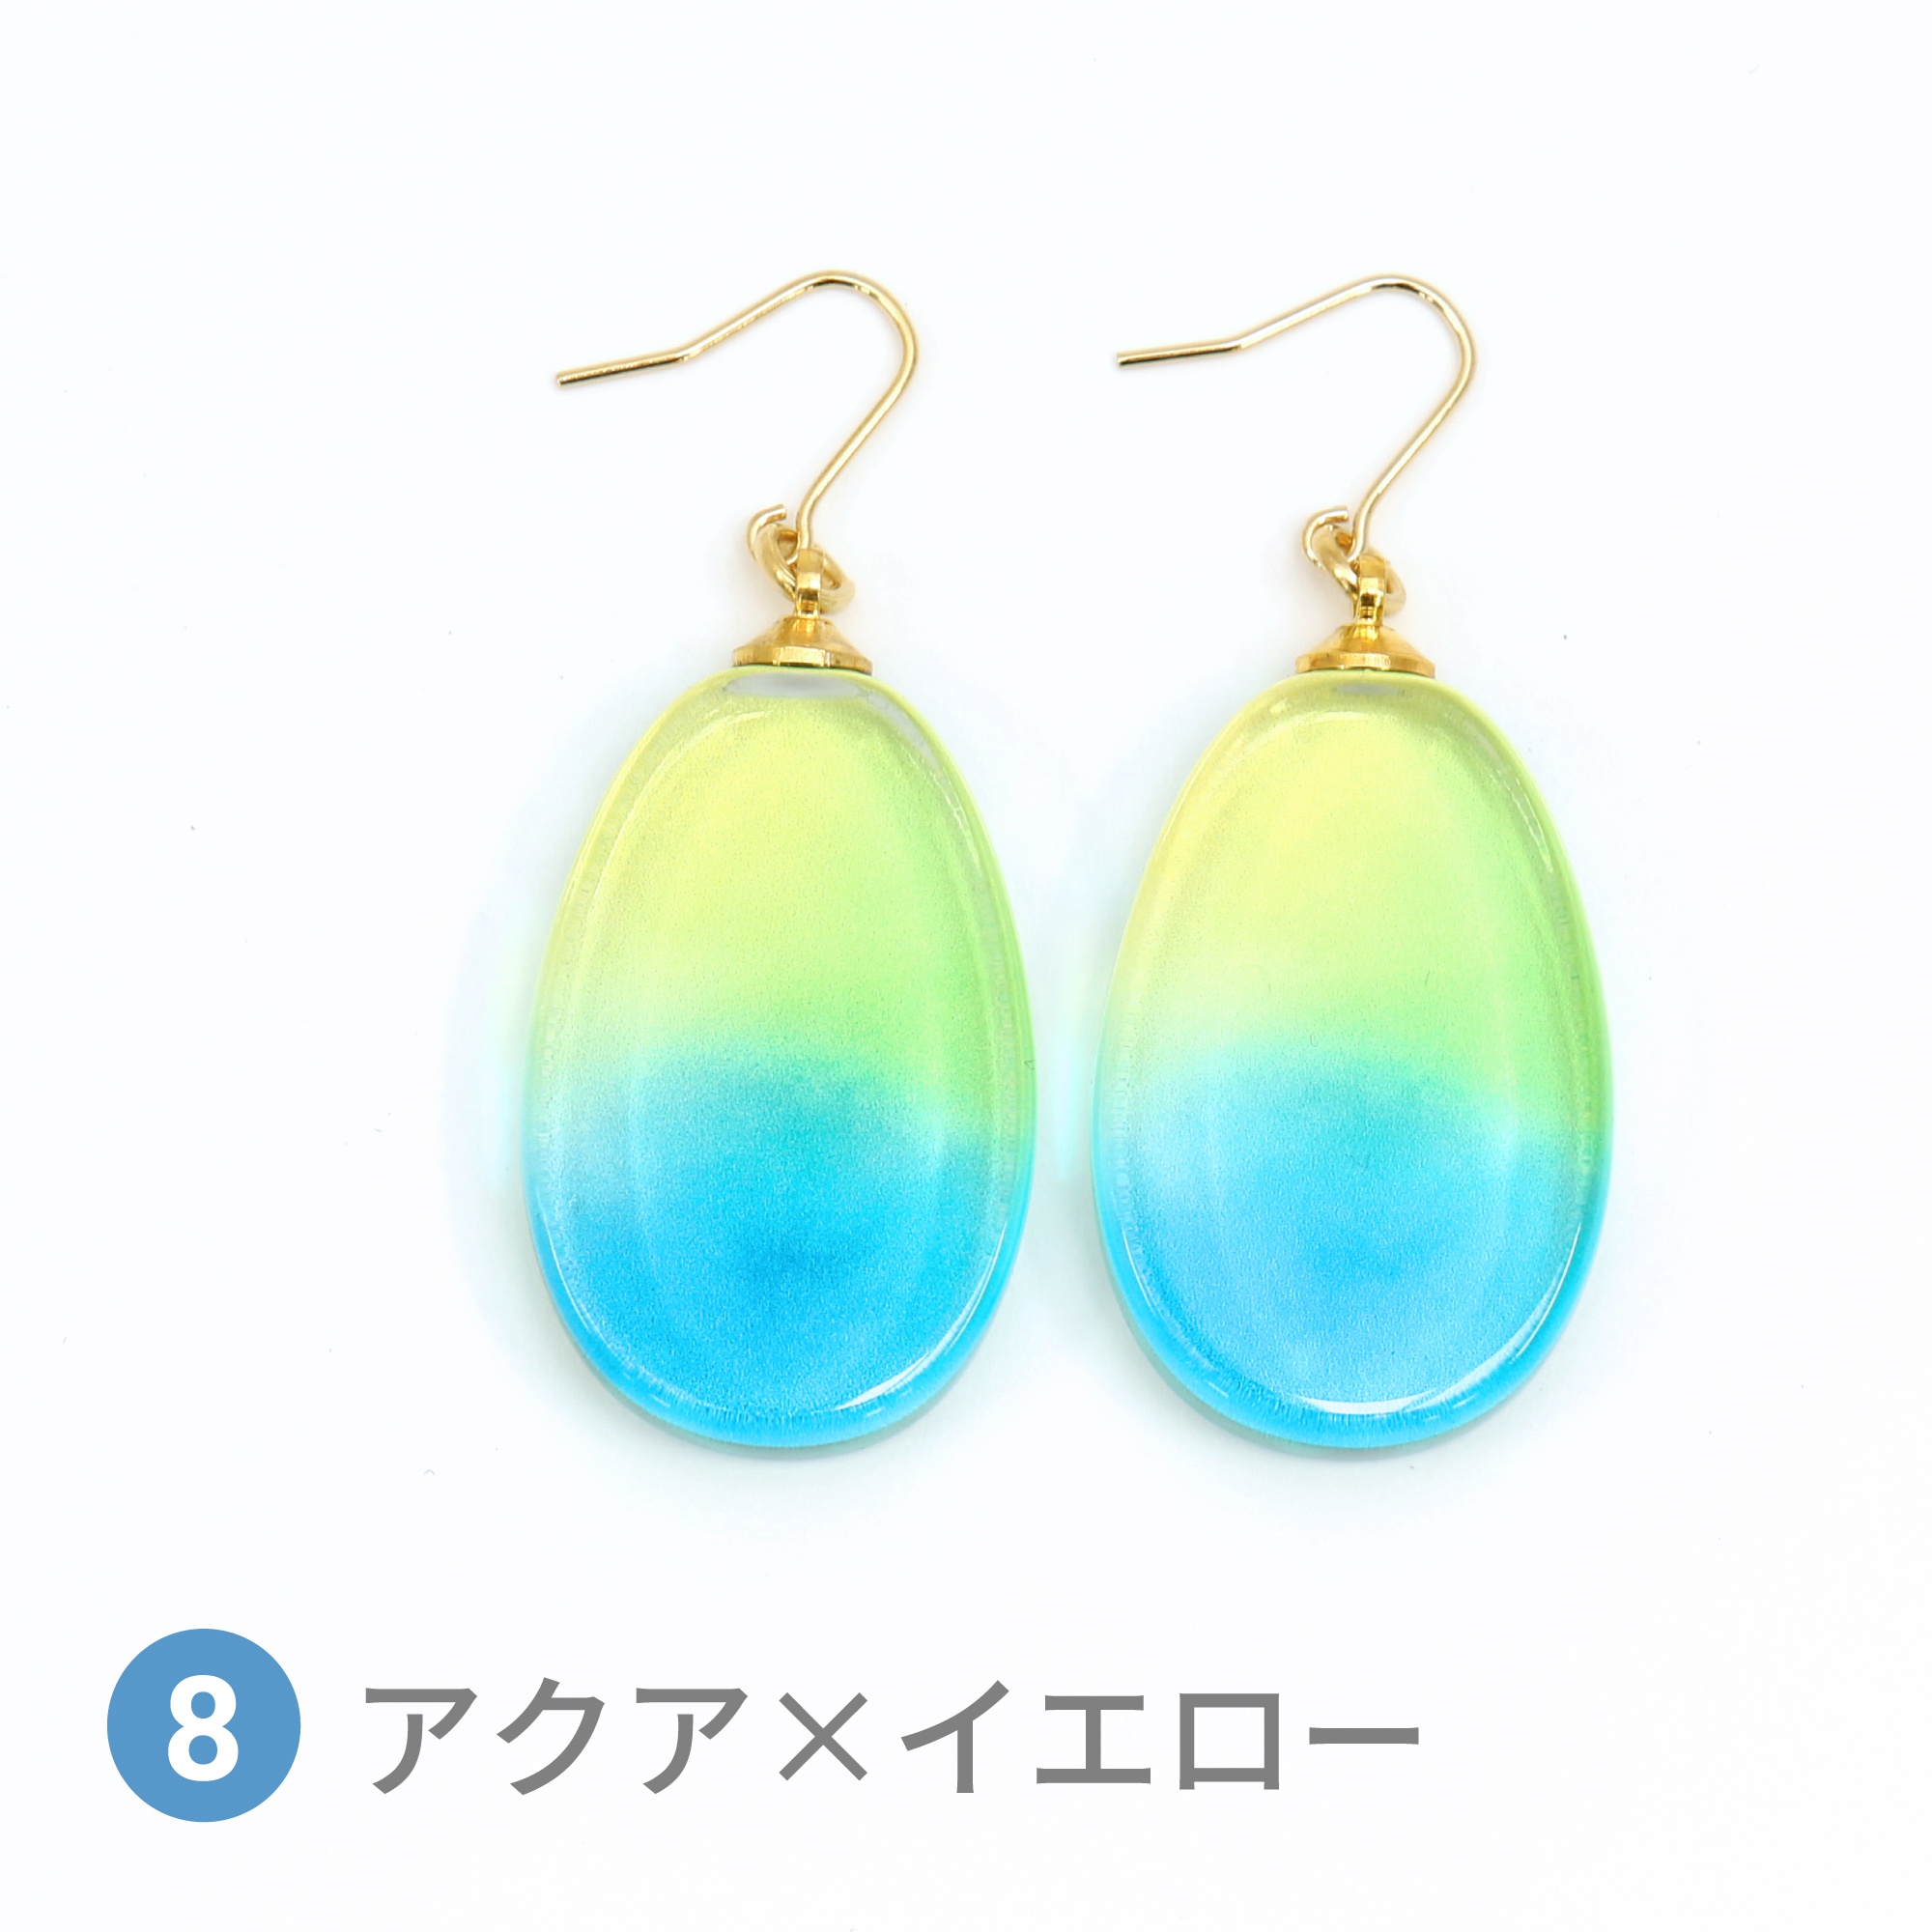 Glass accessories Pierced Earring AURORA aqua&yellow drop shape